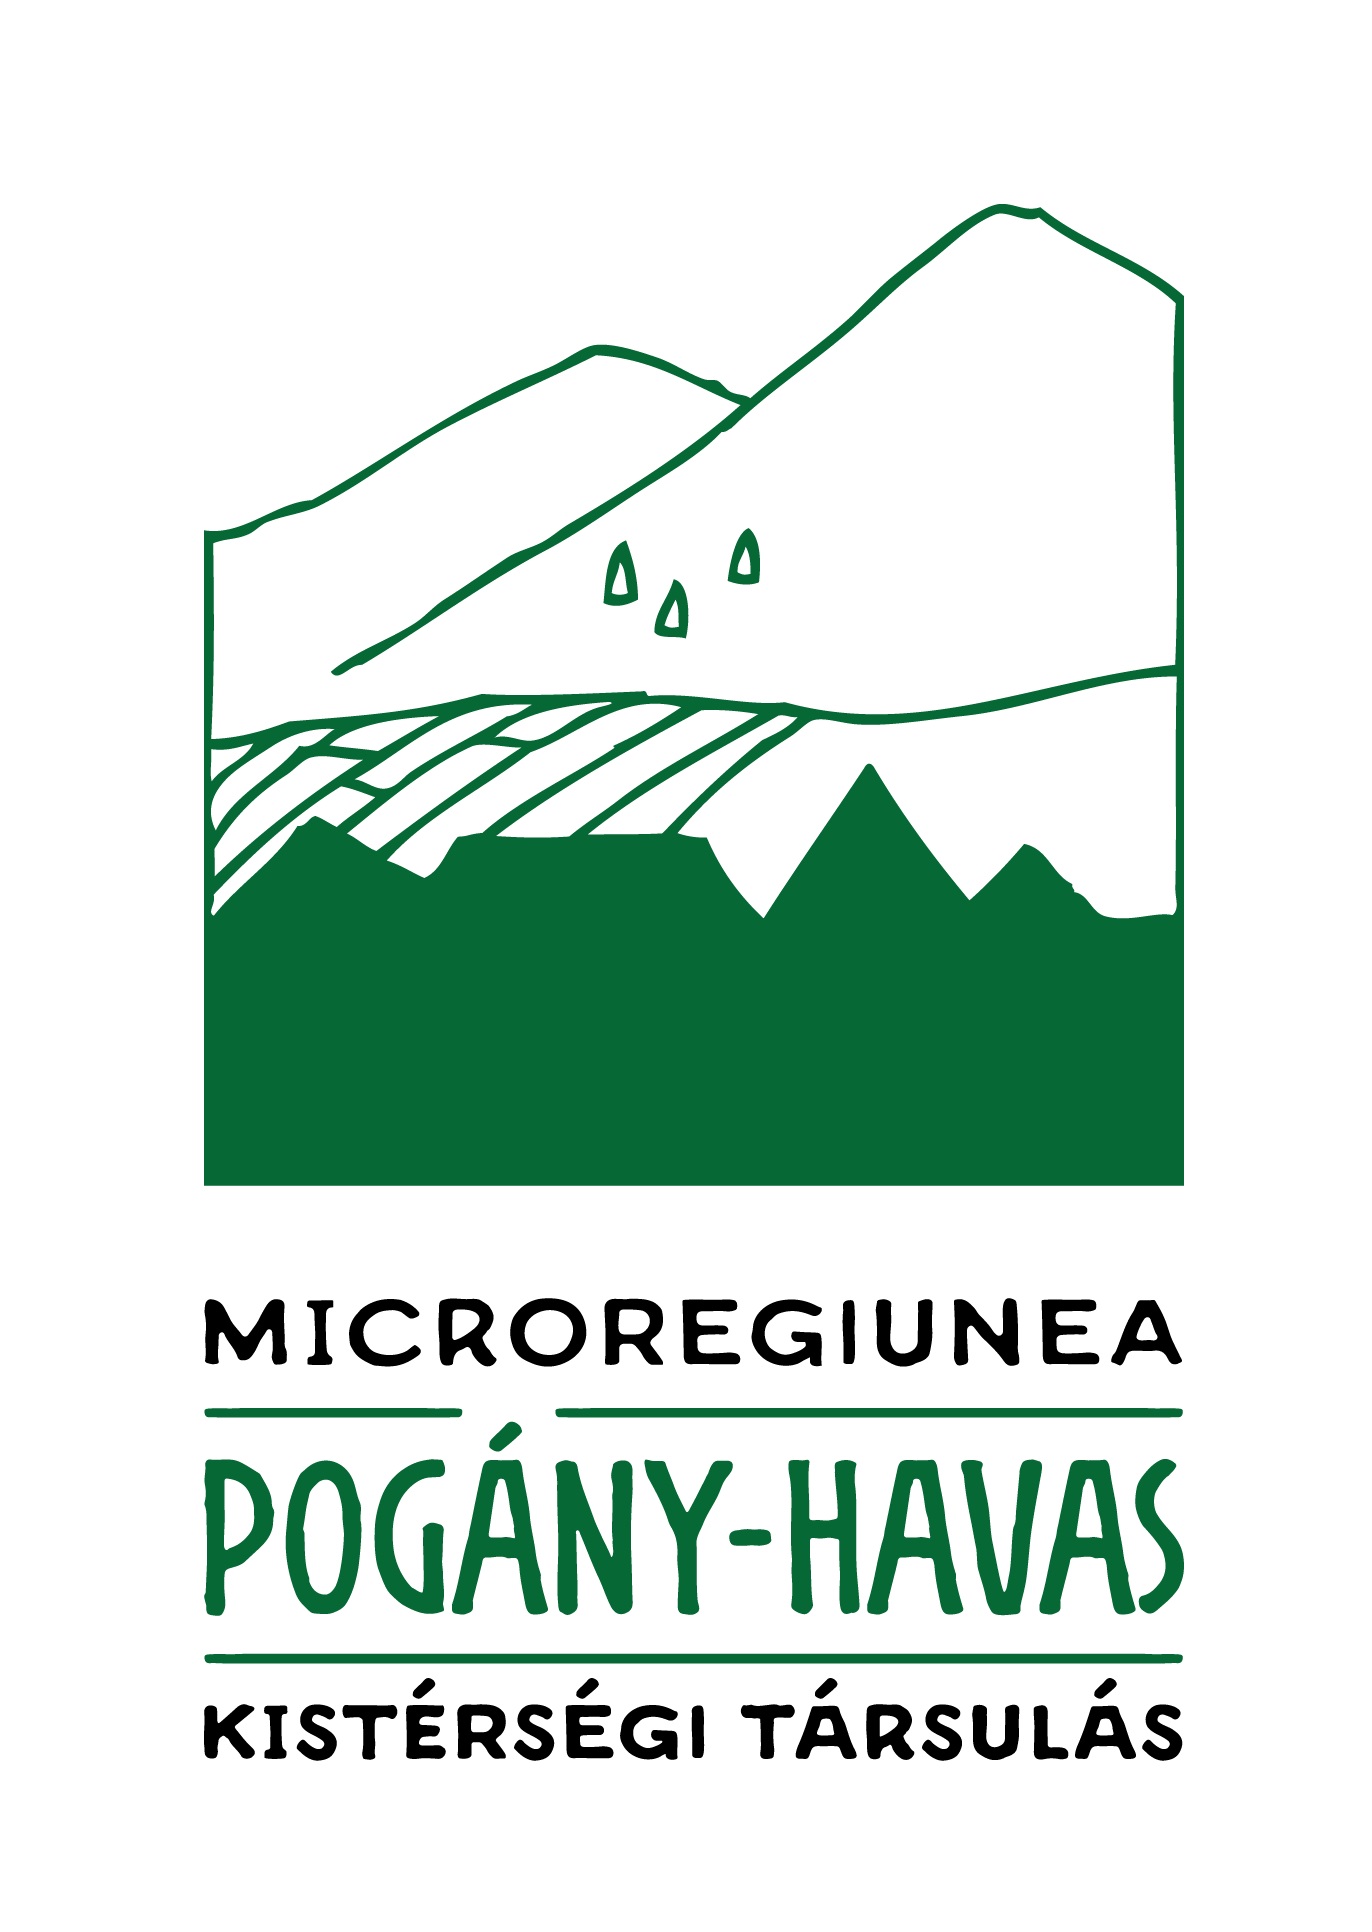 Asociația Microregională Pogány-havas logo